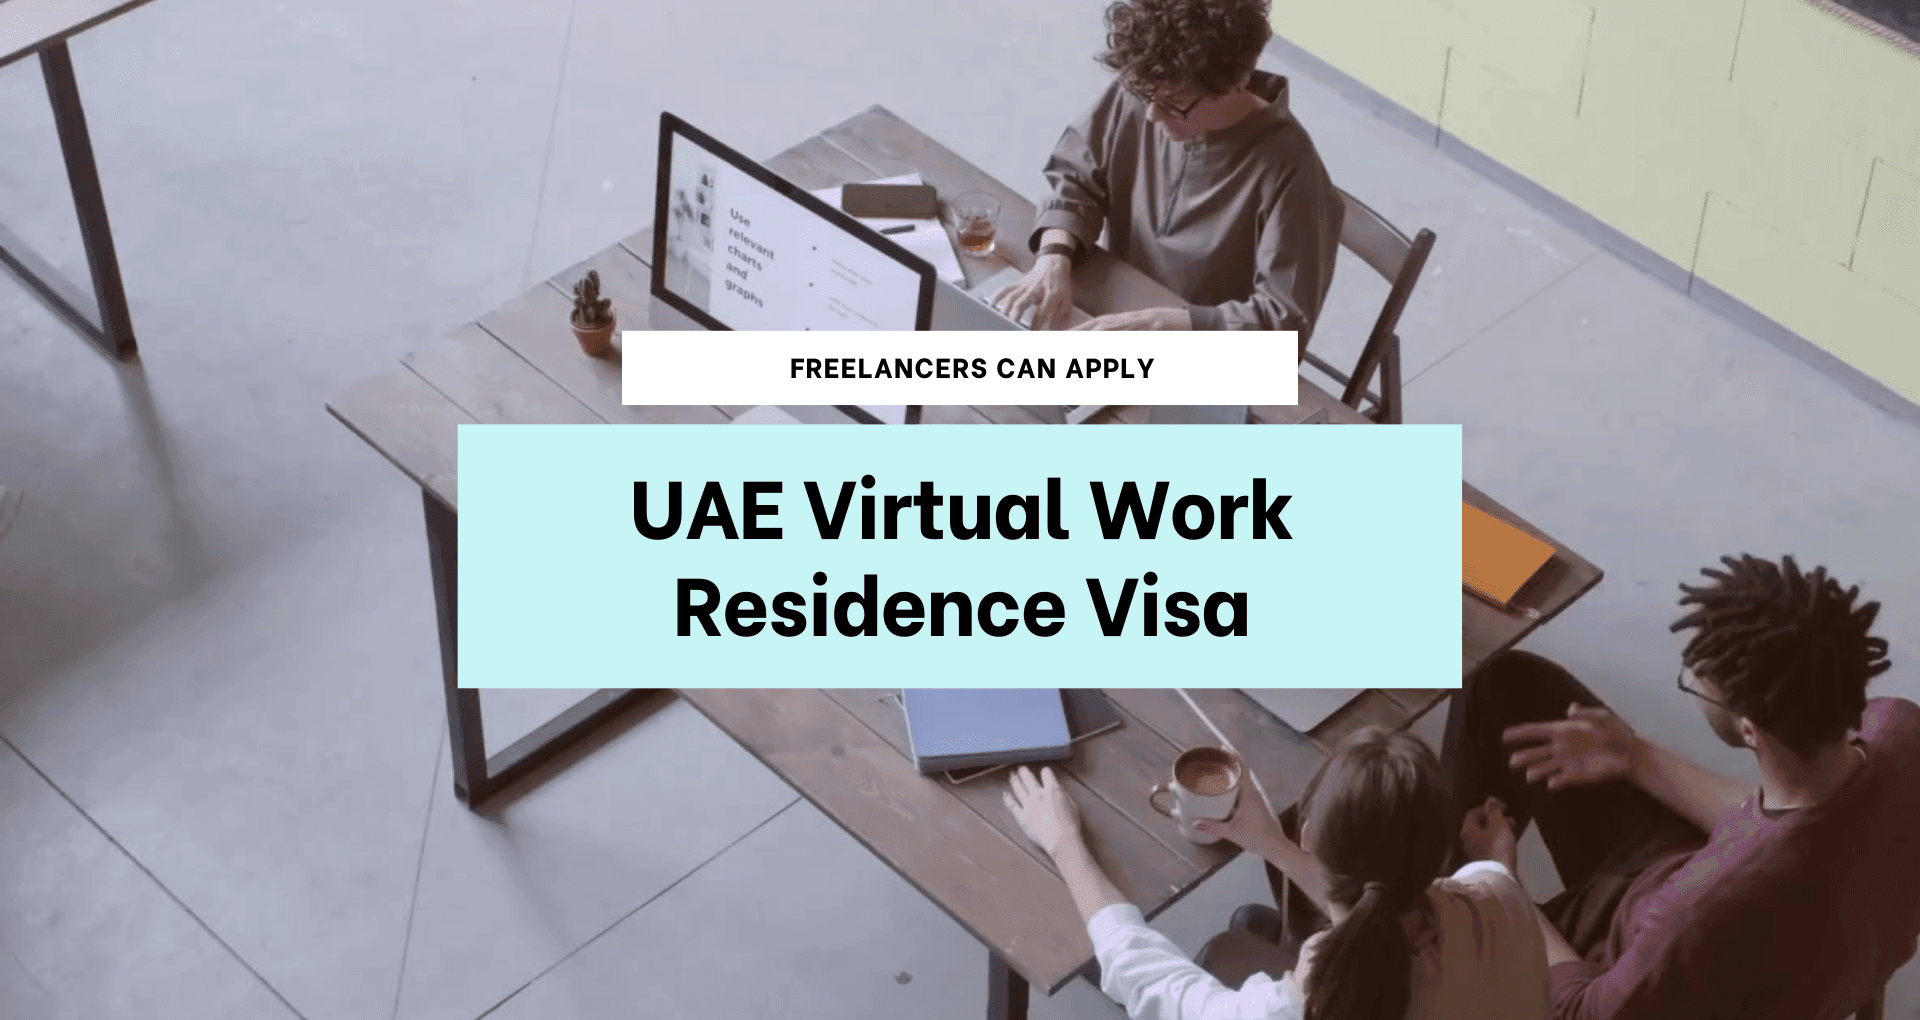 Freelancers can apply for UAE virtual work residence visa